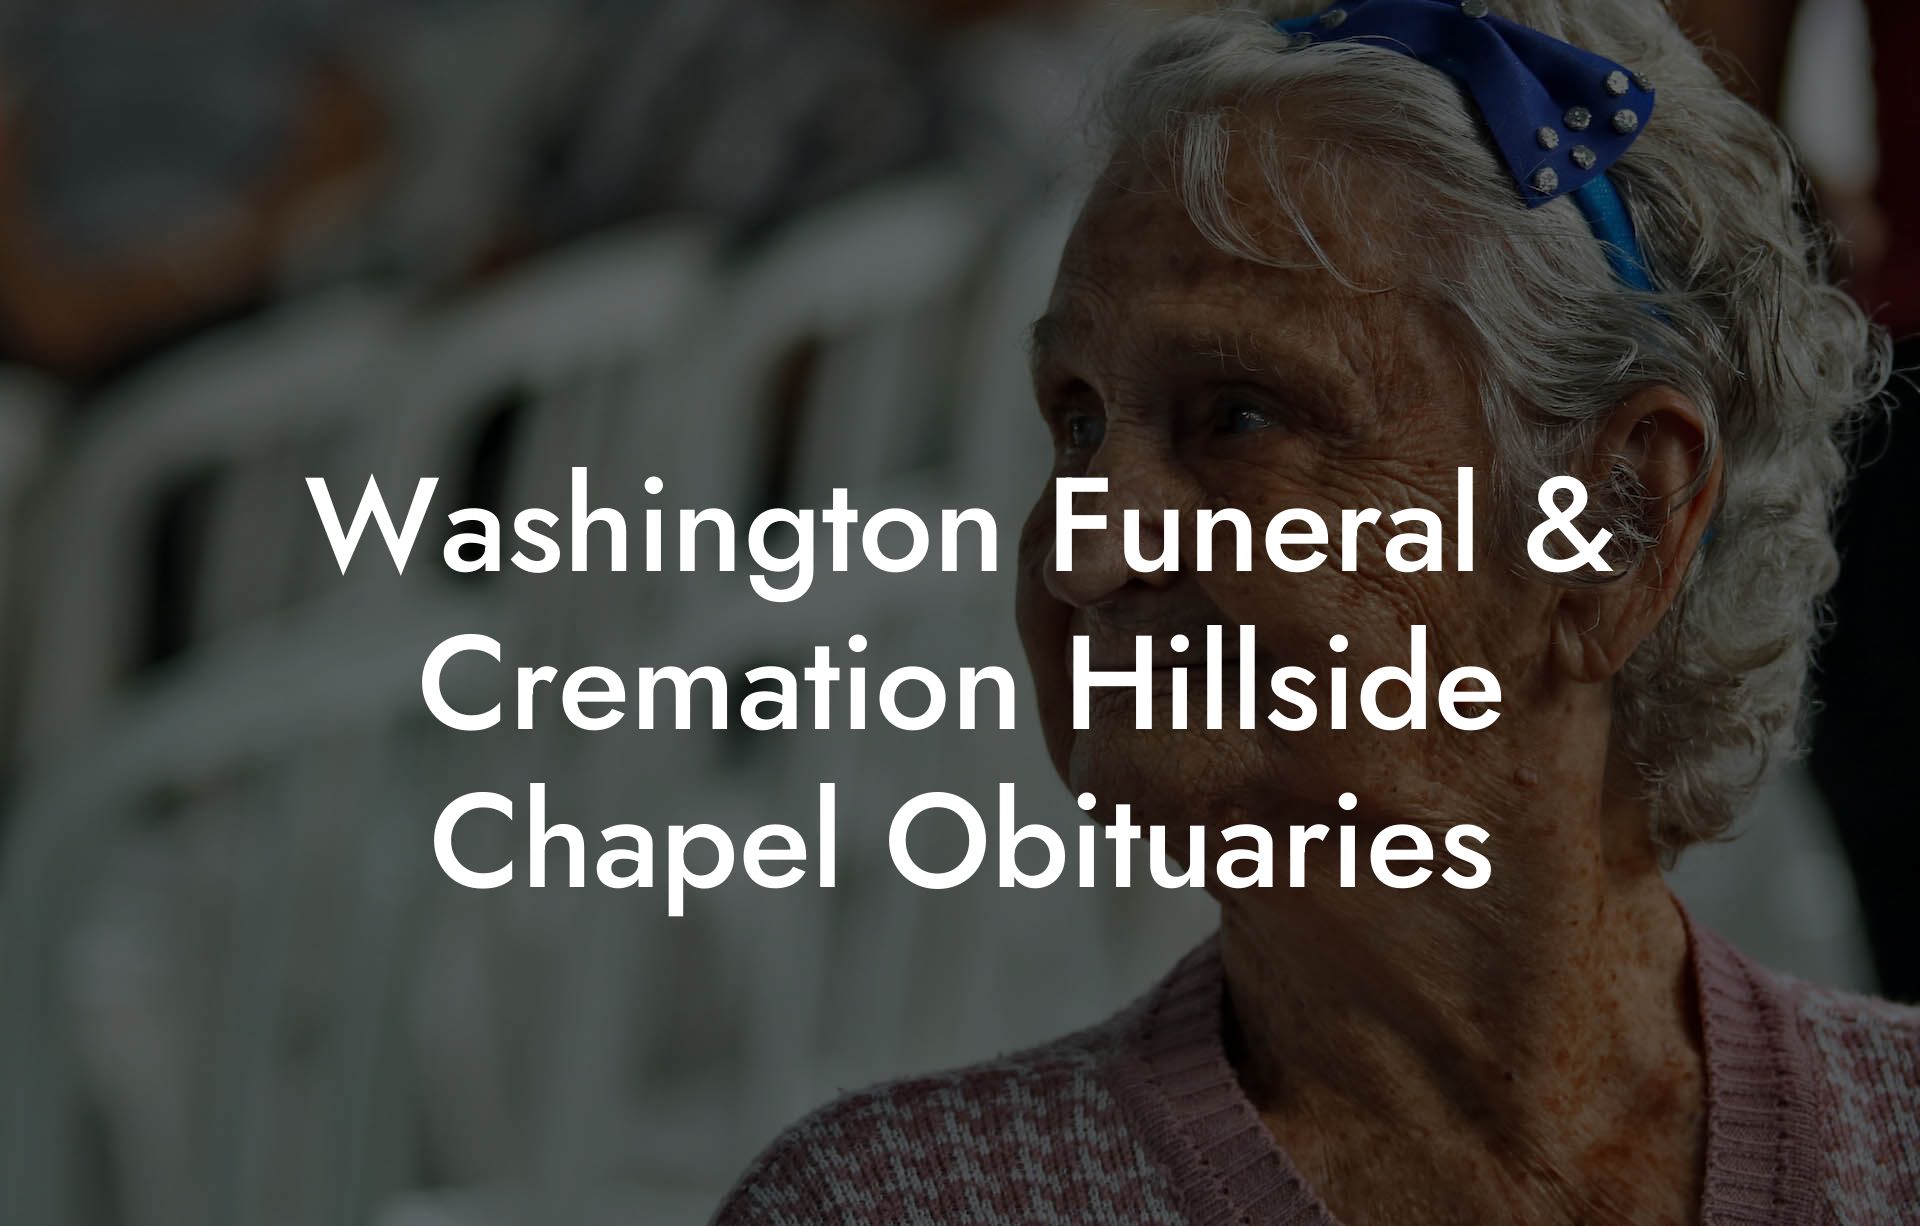 Washington Funeral & Cremation Hillside Chapel Obituaries